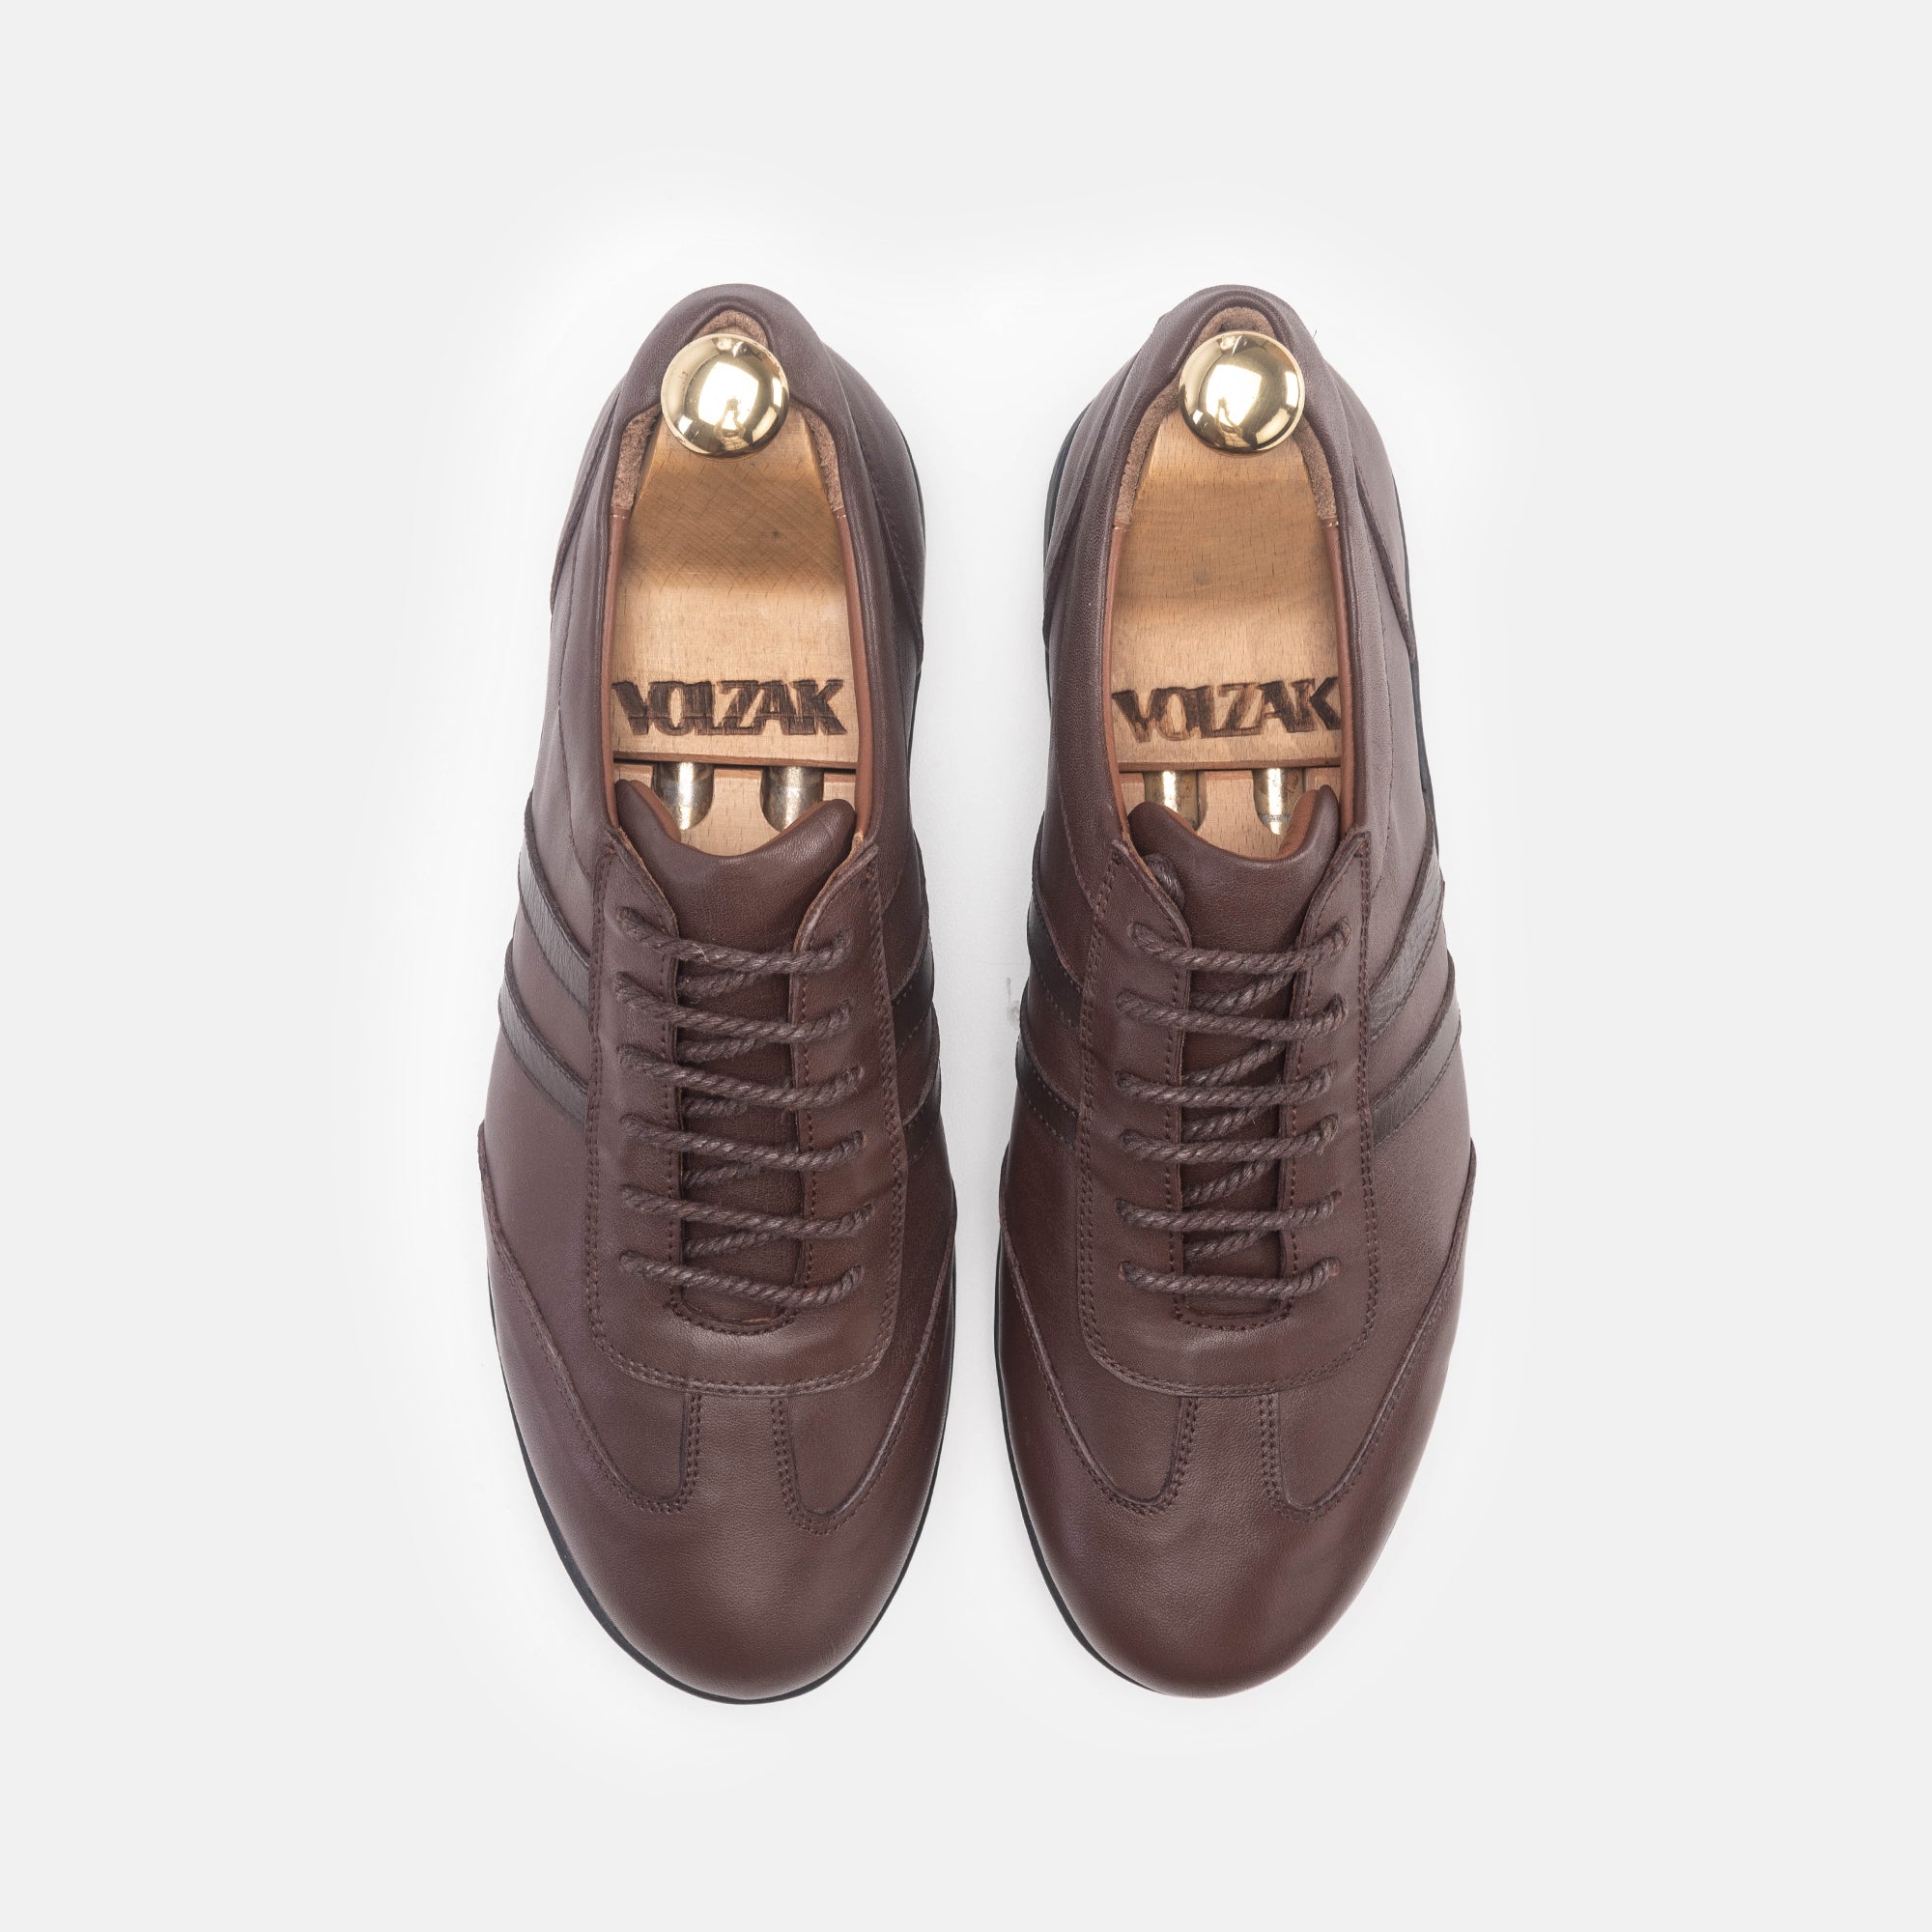 '6042 s Chaussure en cuir Marron